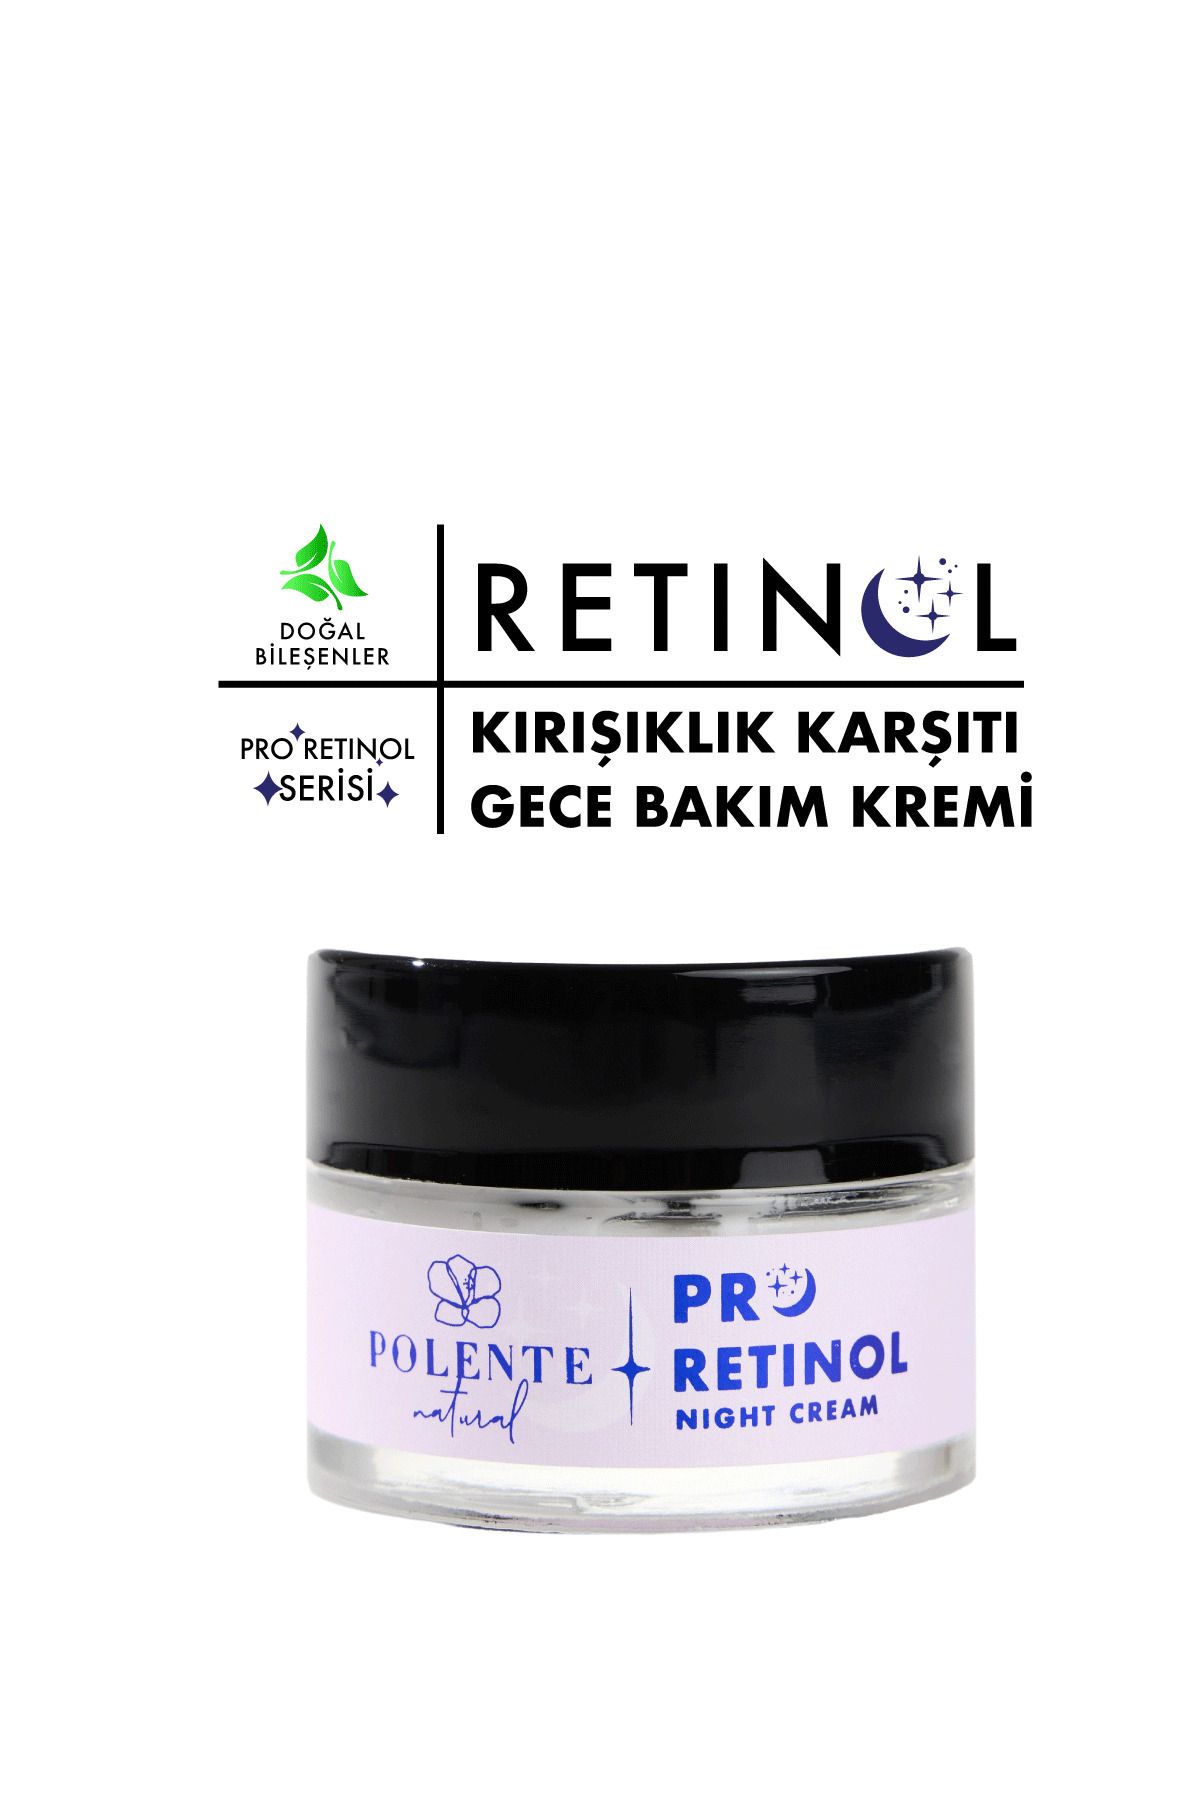 Polente Natural PRO RETİNOL NIGHT CREAM- Retinol İçeren Gece Bakım Kremi